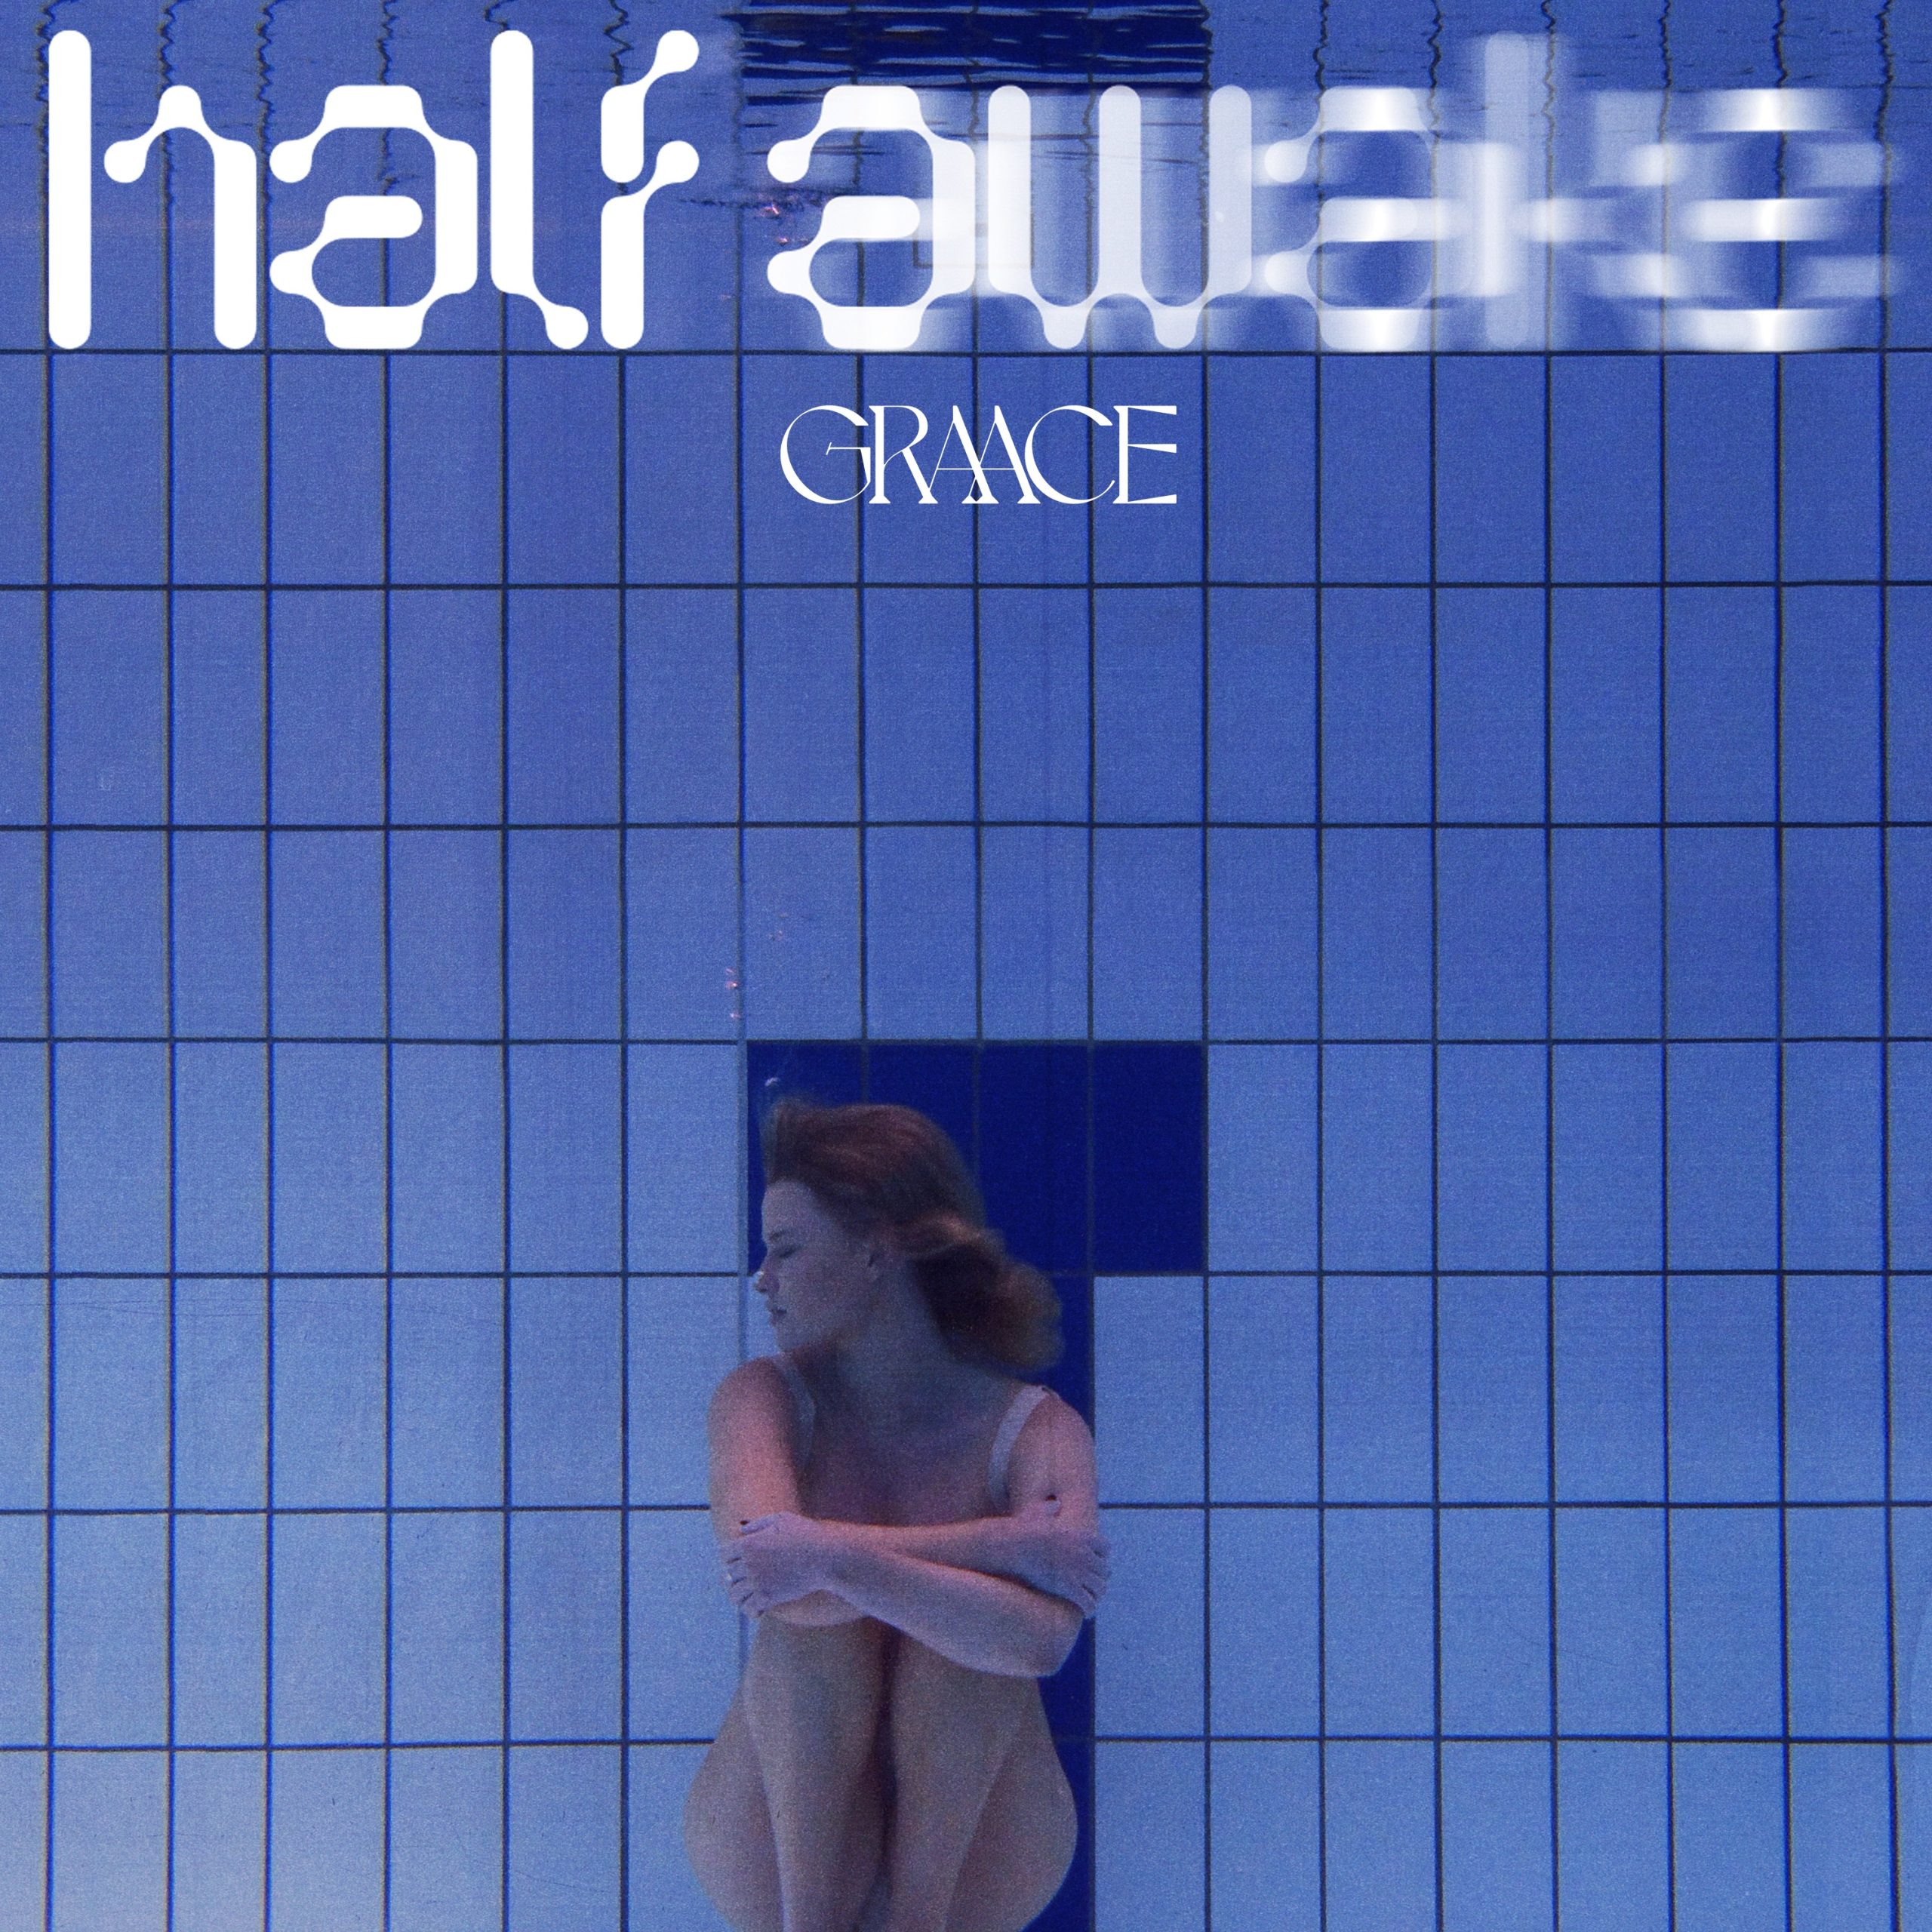 half awake - graace - Australia - indie music - indie pop - new music - music blog - wolf in a suit - wolfinasuit - wolf in a suit blog - wolf in a suit music blog